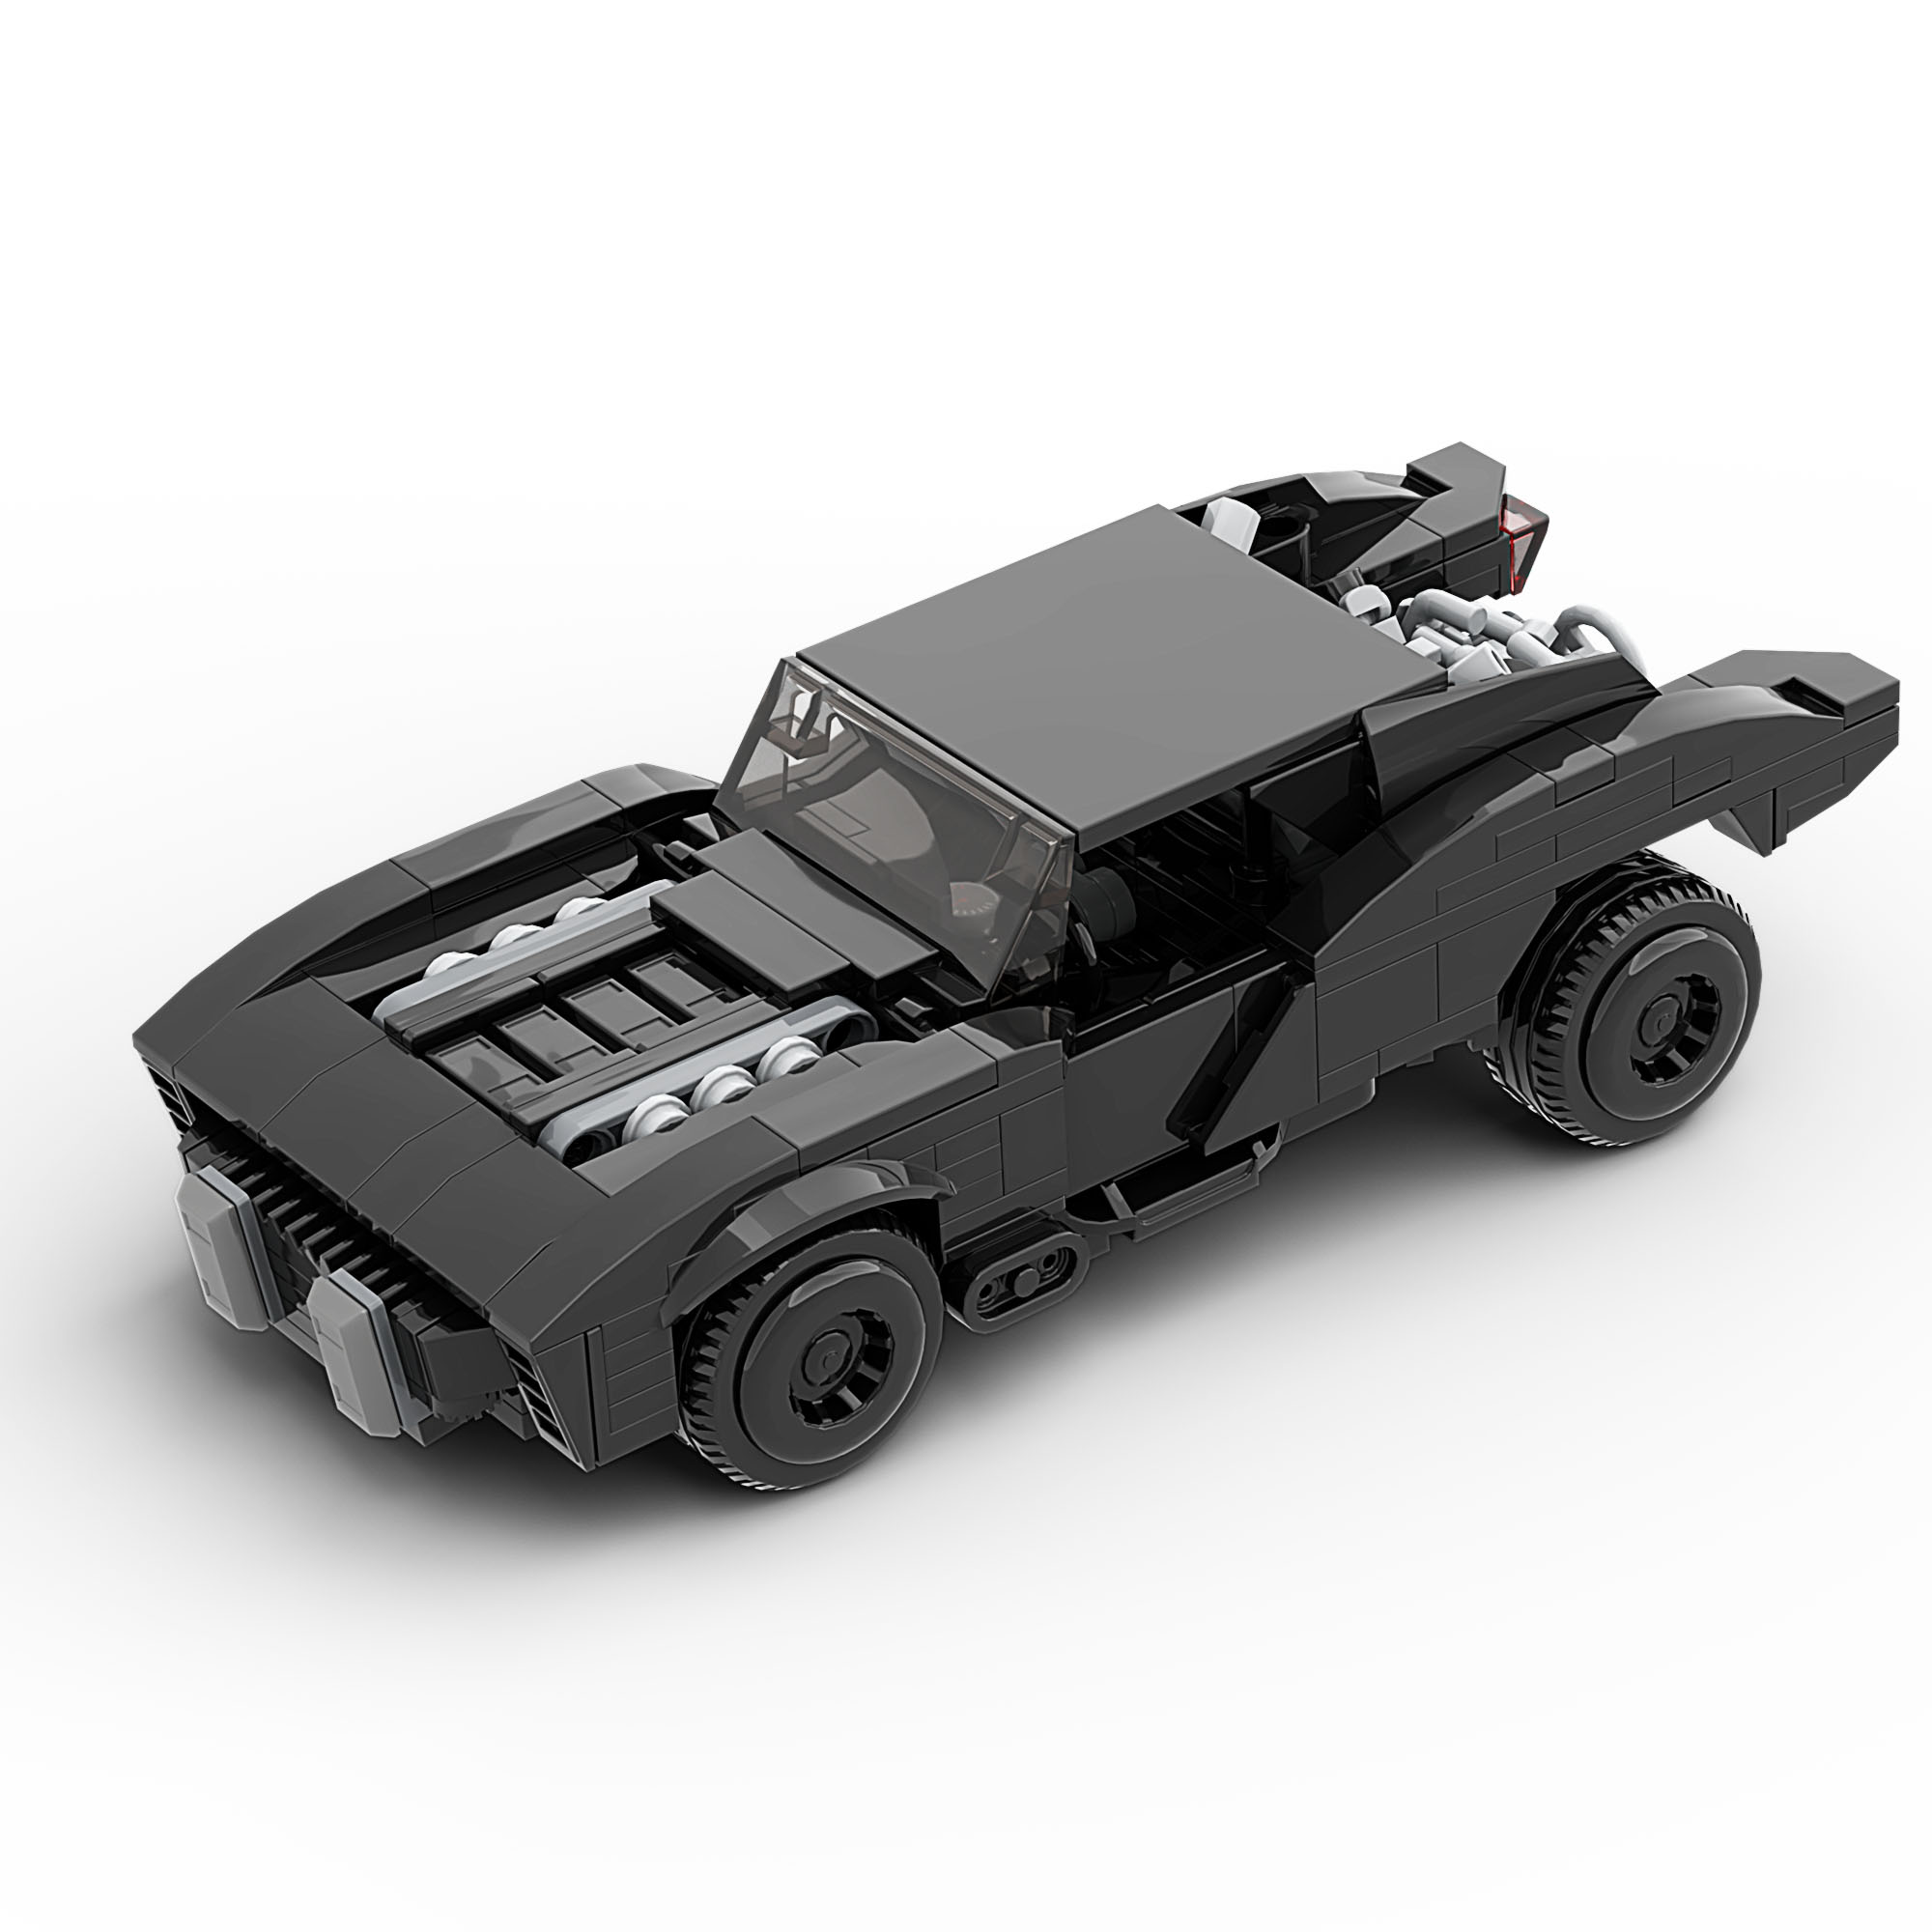 The Batman Batmobile Amzing LEGO Engine Custom Build! 